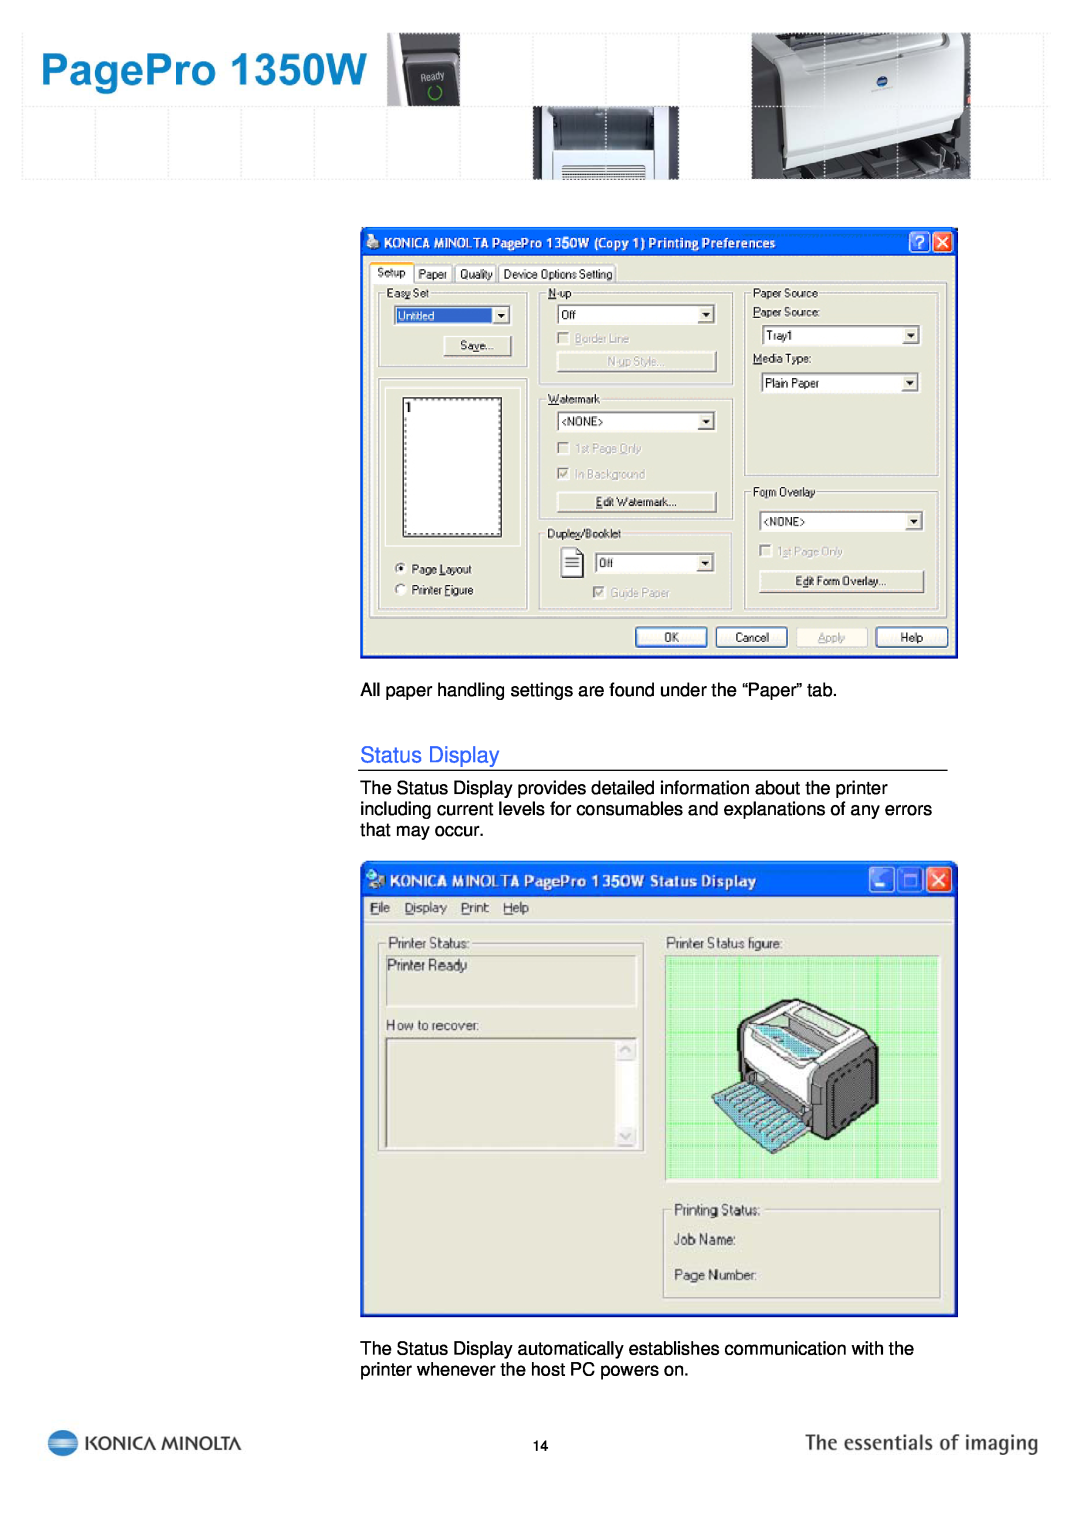 Konica Minolta PagePro 1350W manual Status Display 